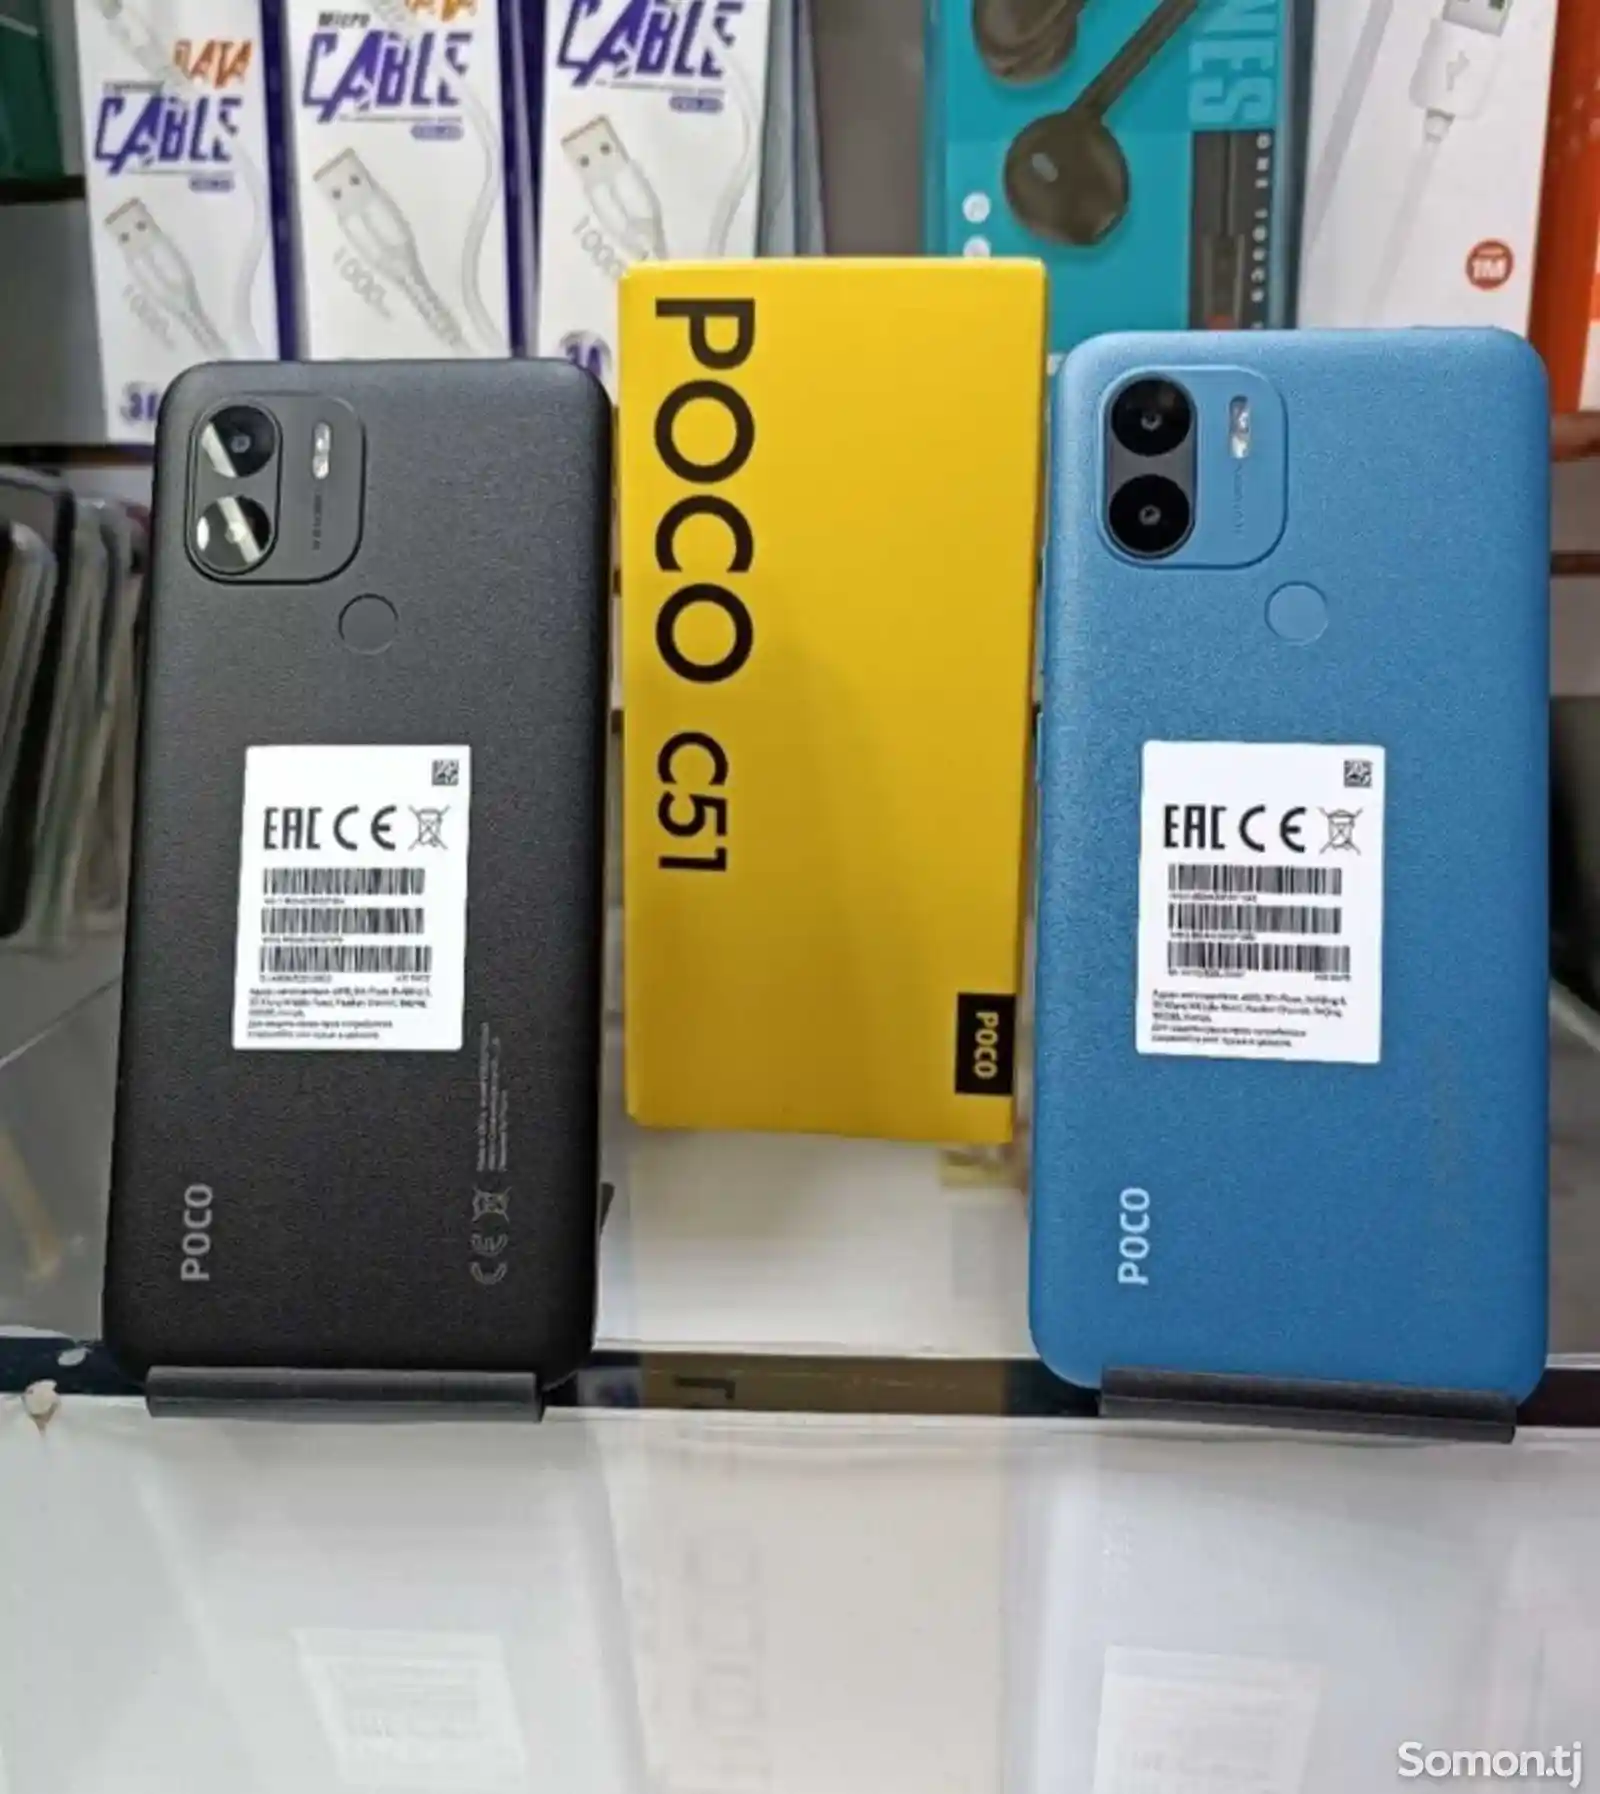 Xiaomi Poco C51 64Gb-3